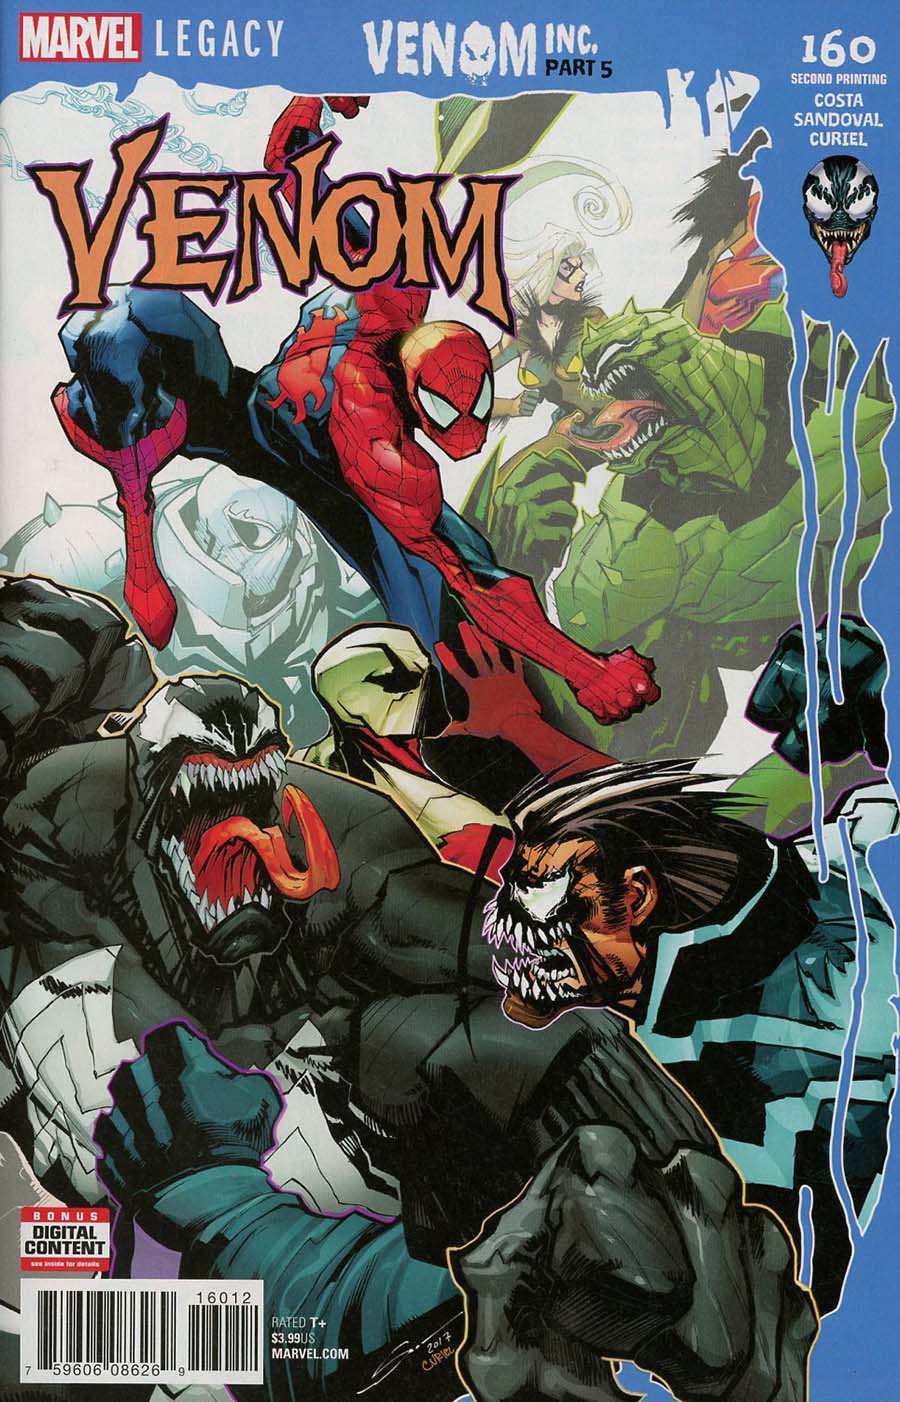 Venom Vol 3 #160 Cover D 2nd Ptg Variant Gerardo Sandoval Cover (Venom Inc Part 5)(Marvel Legacy Tie-In)